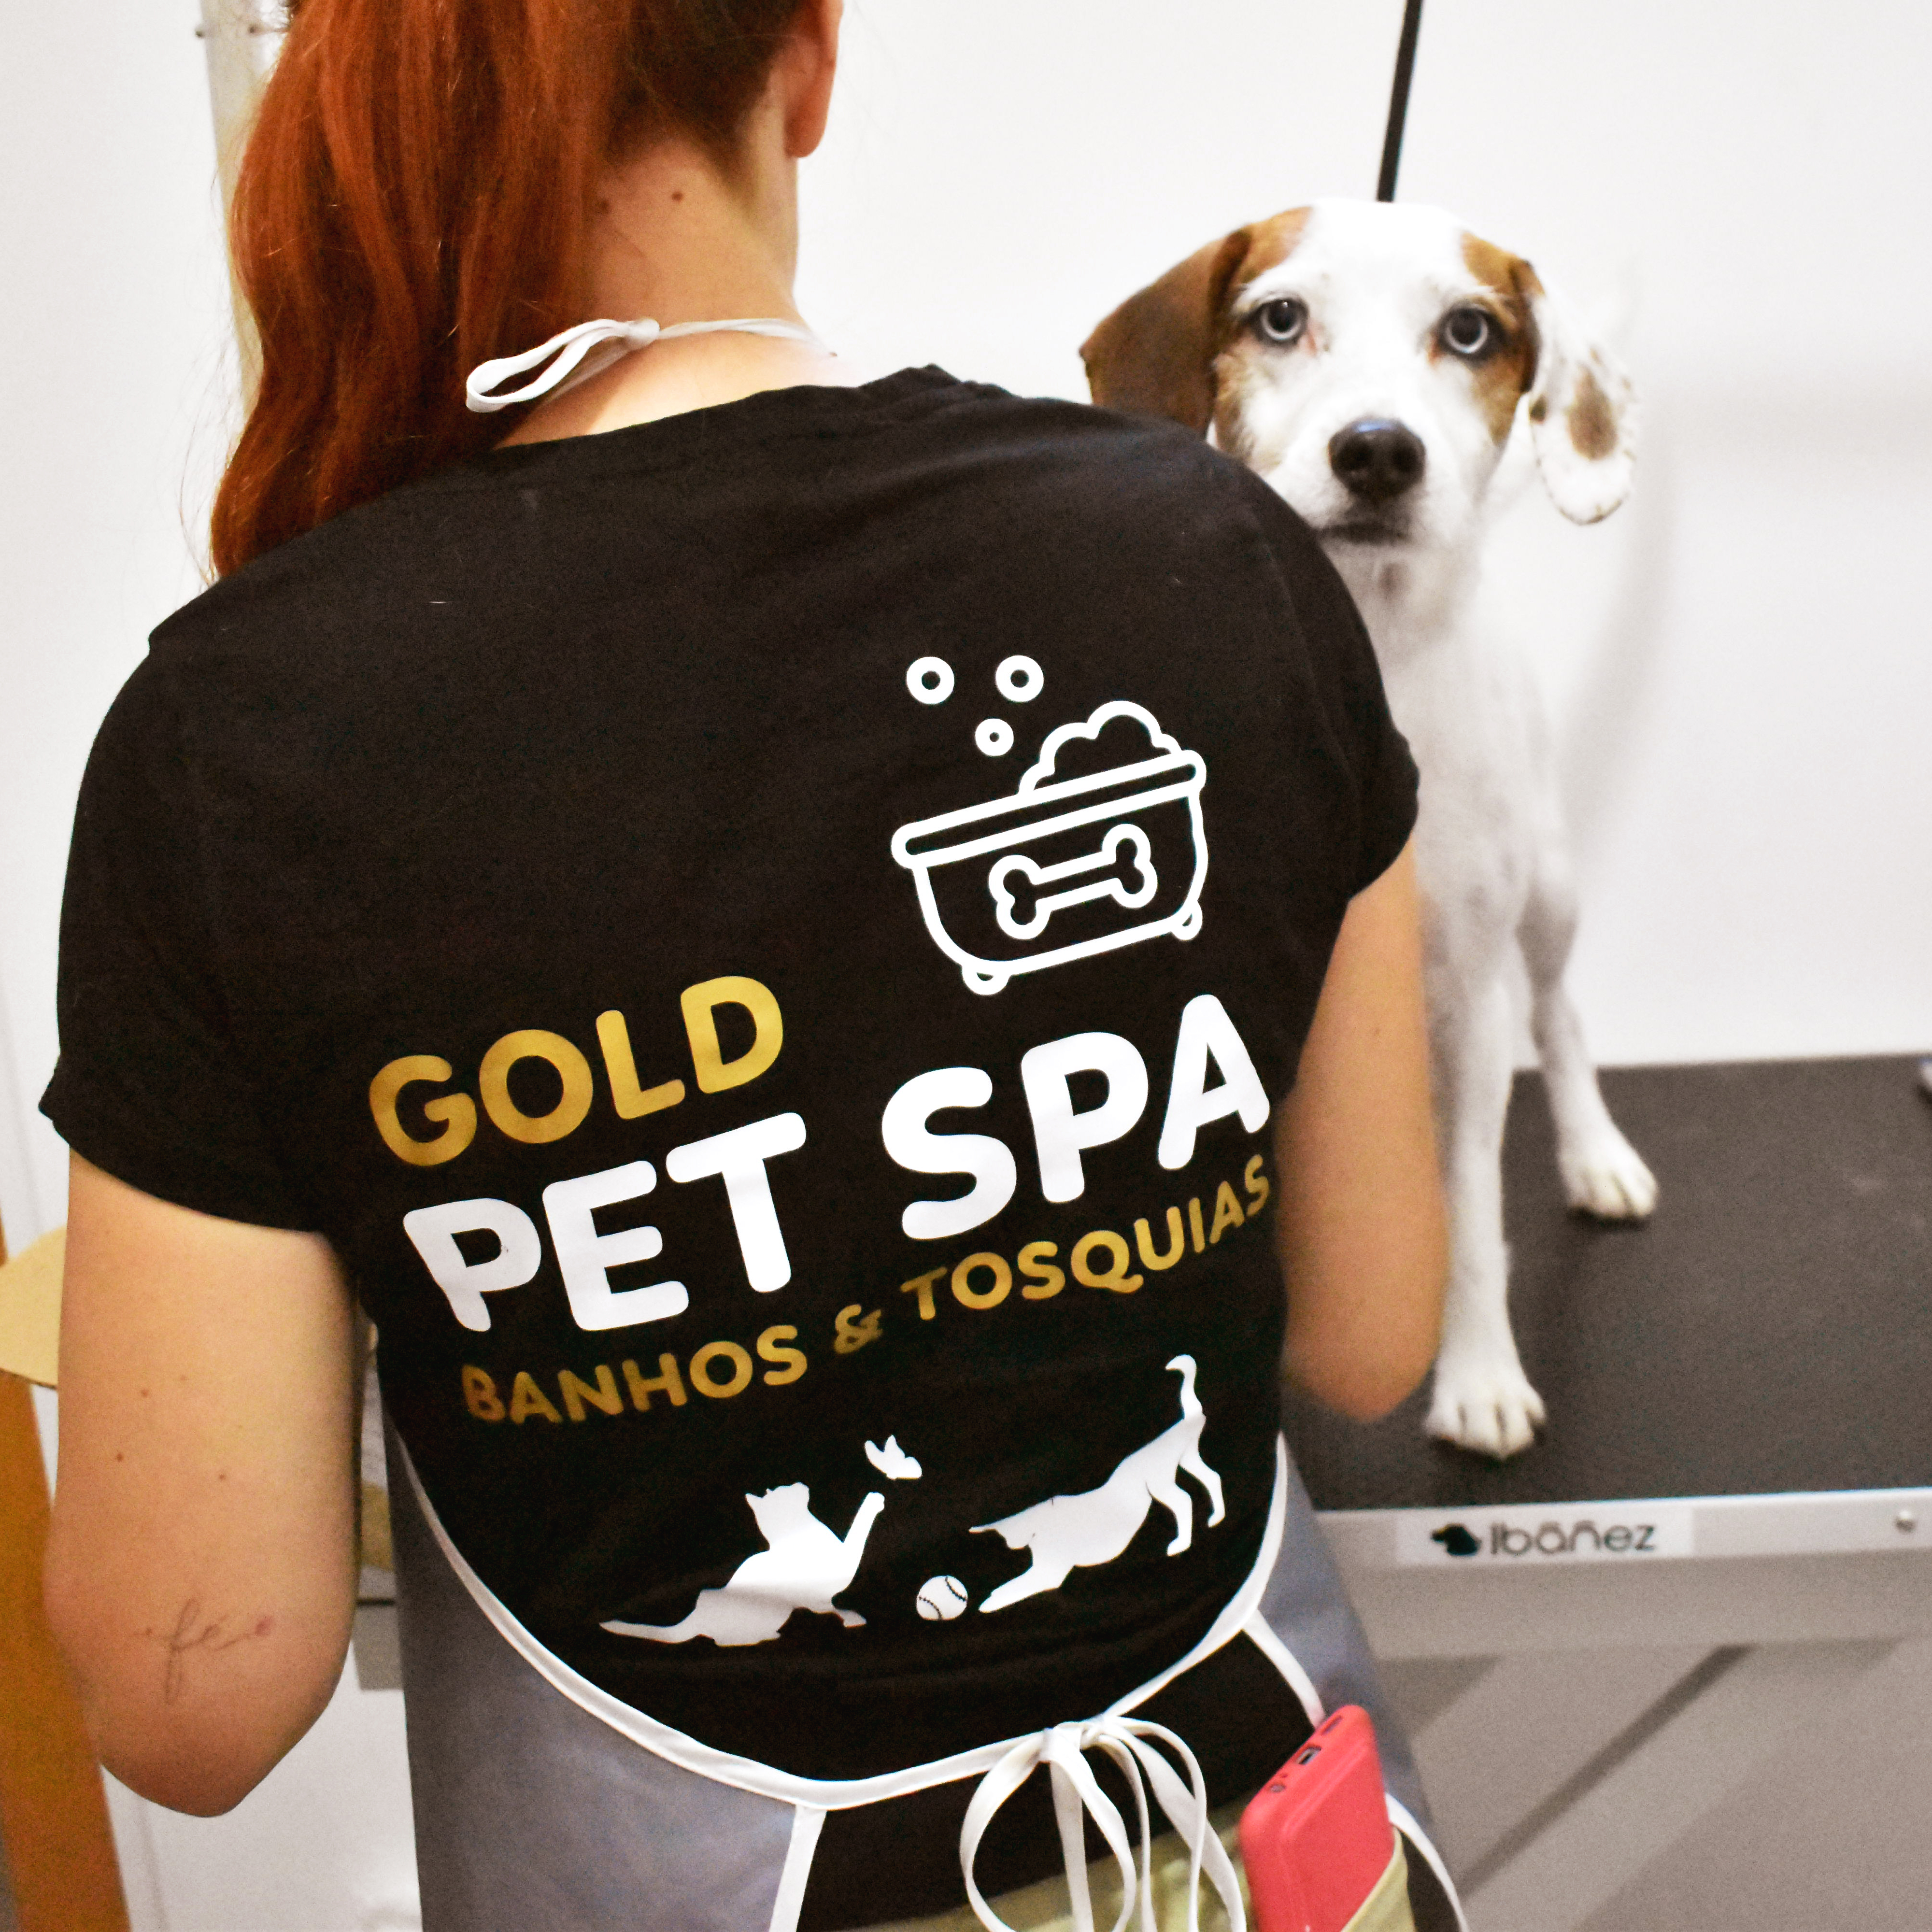 Gold Pet Spa